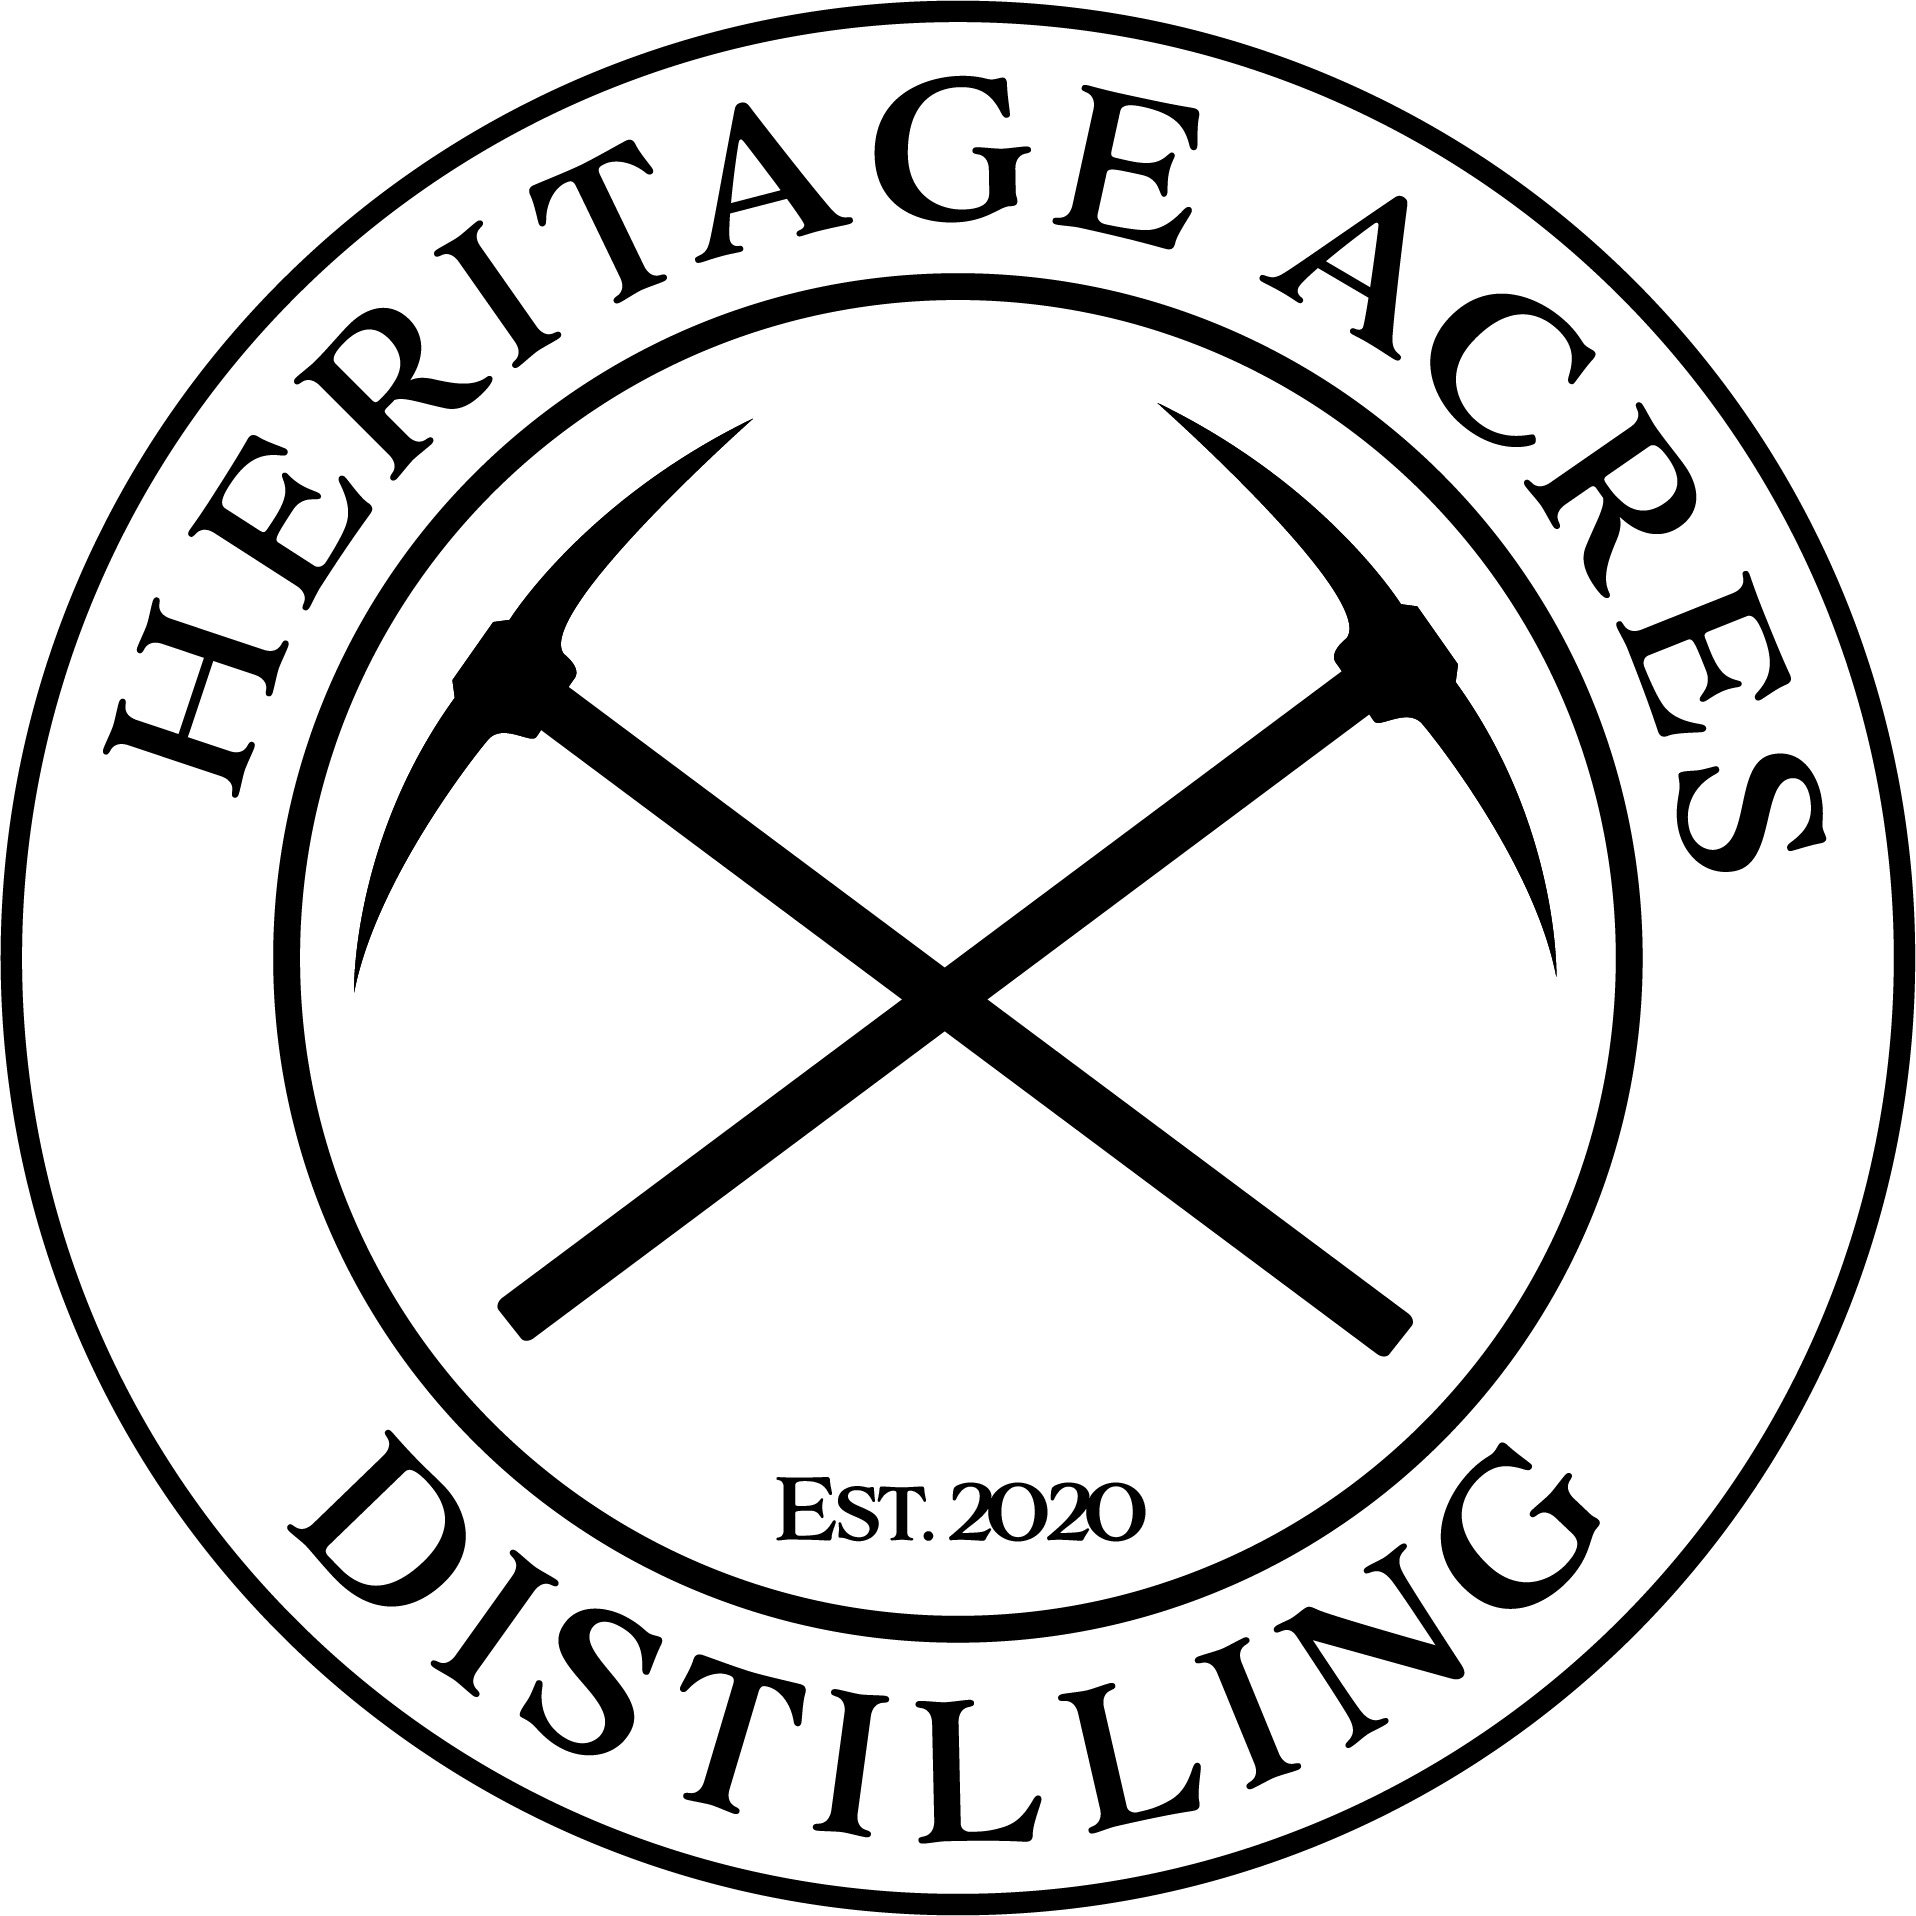 Heritage Acres 2.jpeg